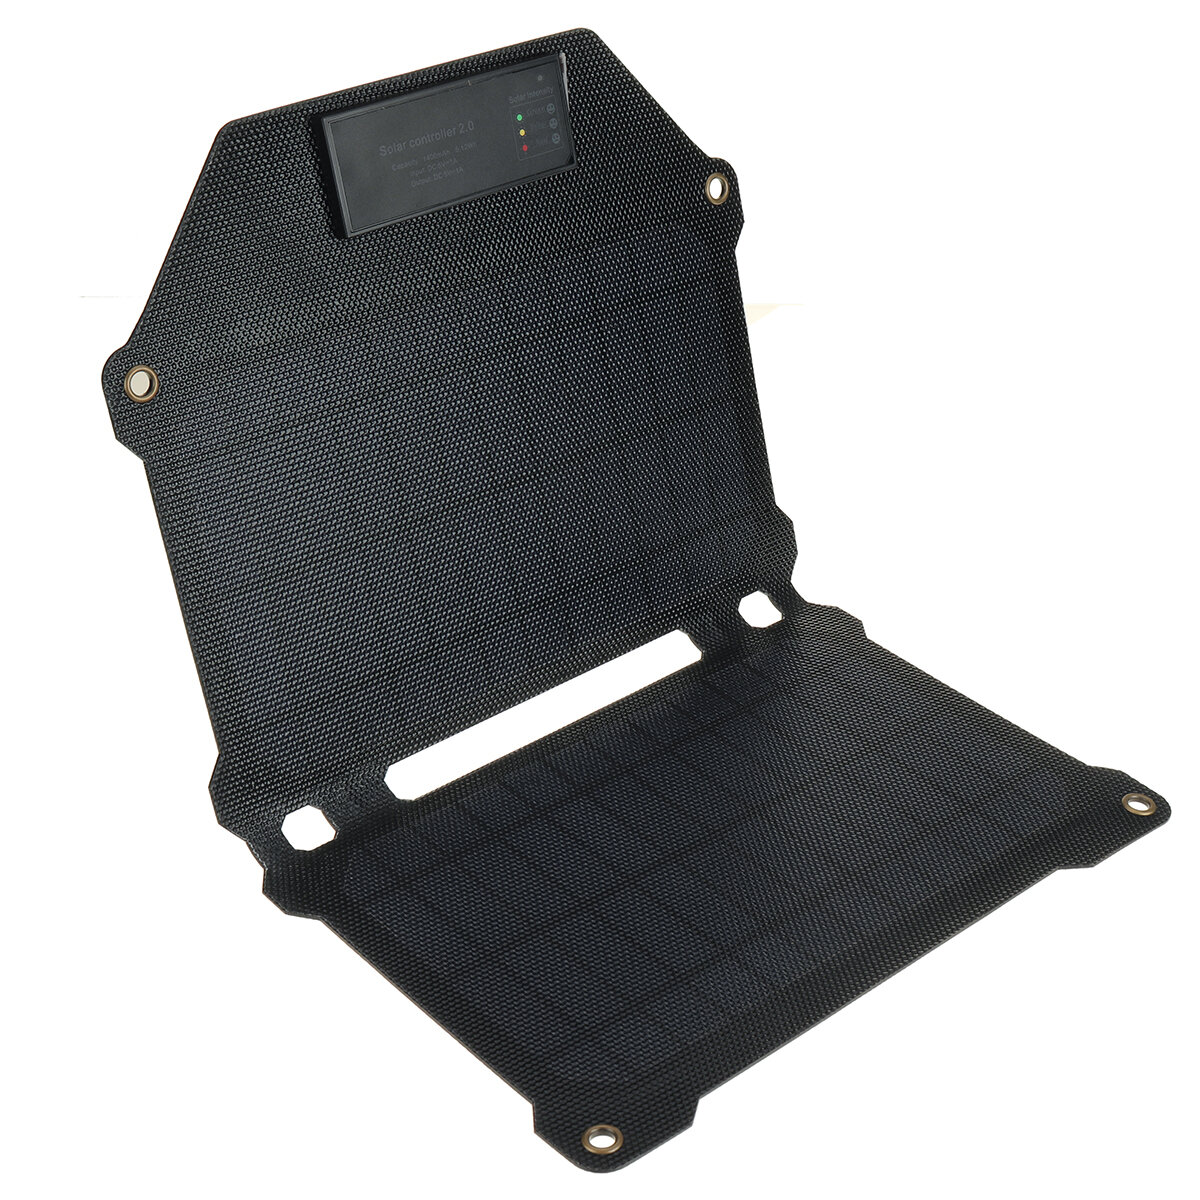 

20W Portable Solar Panel Kit USB Charger Kit Waterproof Monocrystalline Silicon Solar Power Bank